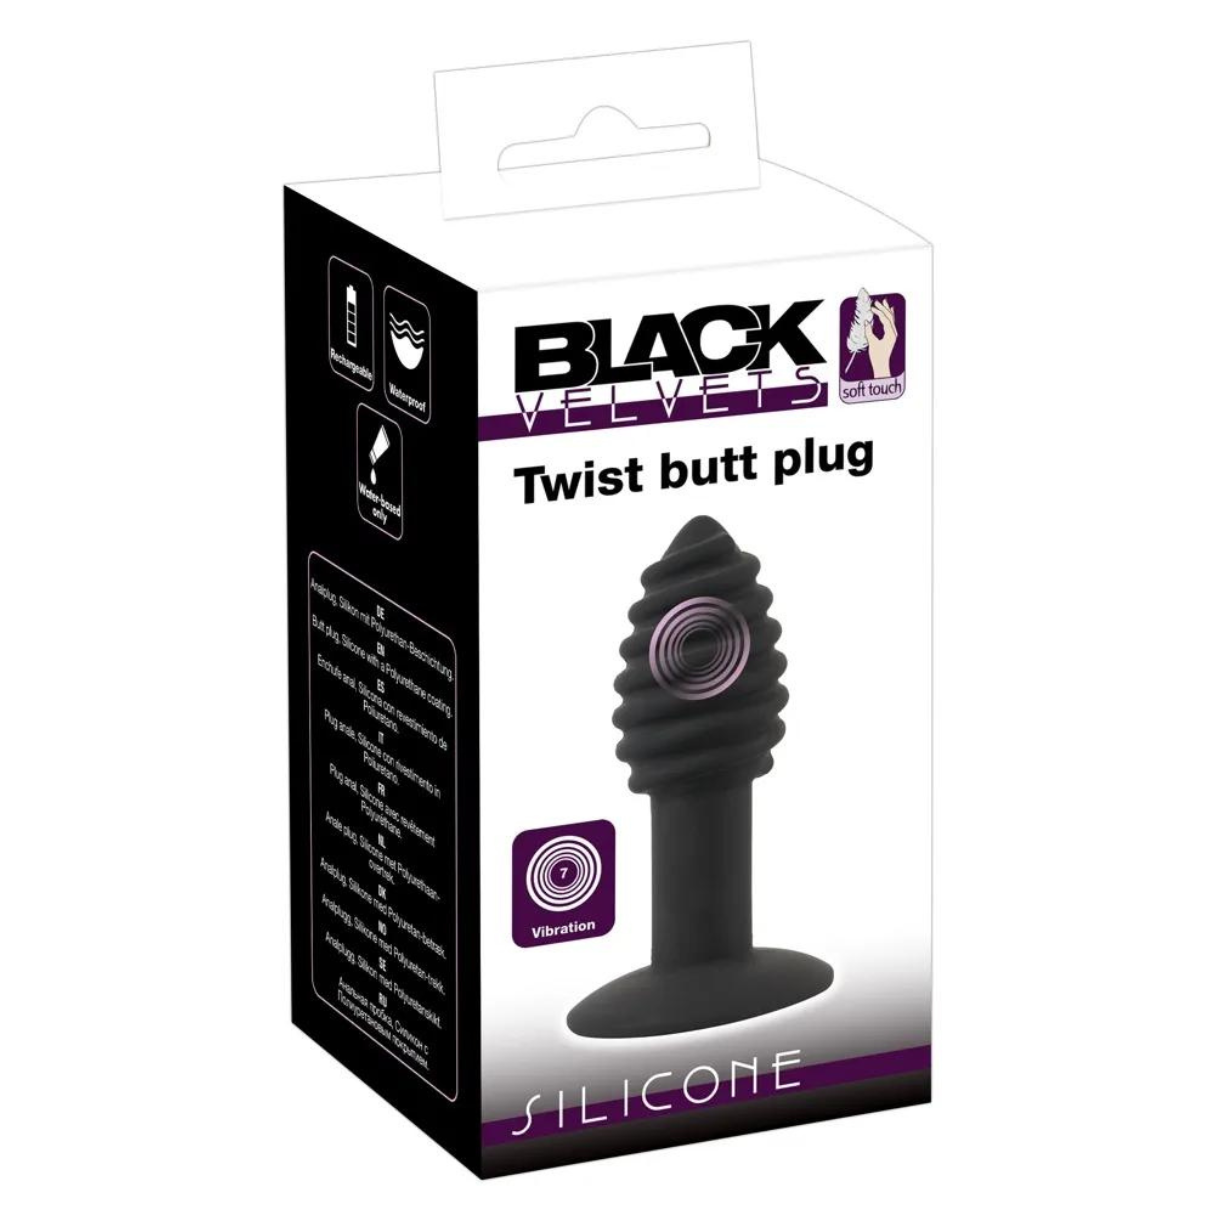 BLACK VELVETS Twist butt plug Vibrator